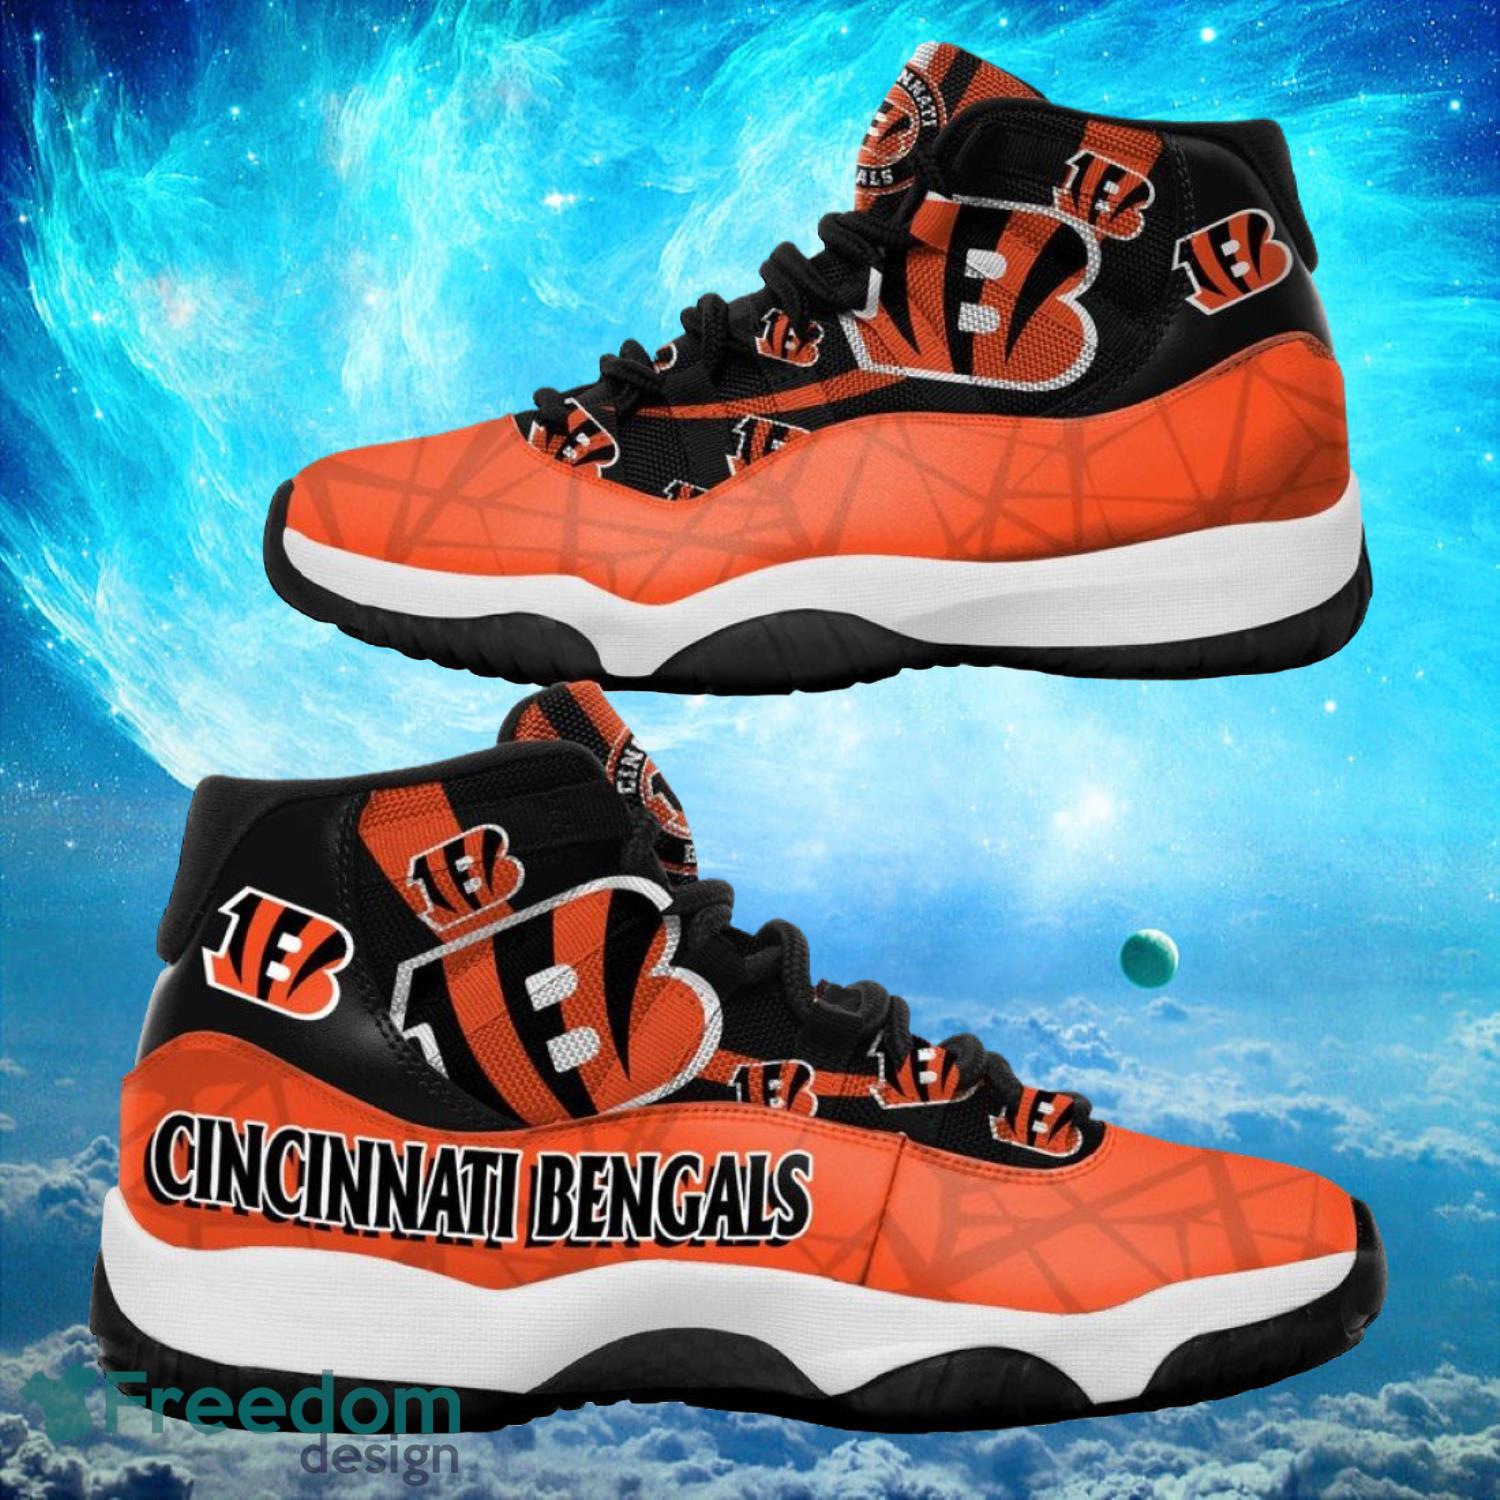 Cincinnati Bengals NFL Air Jordan 11 Sneakers Shoes Gift For Fans Product Photo 1